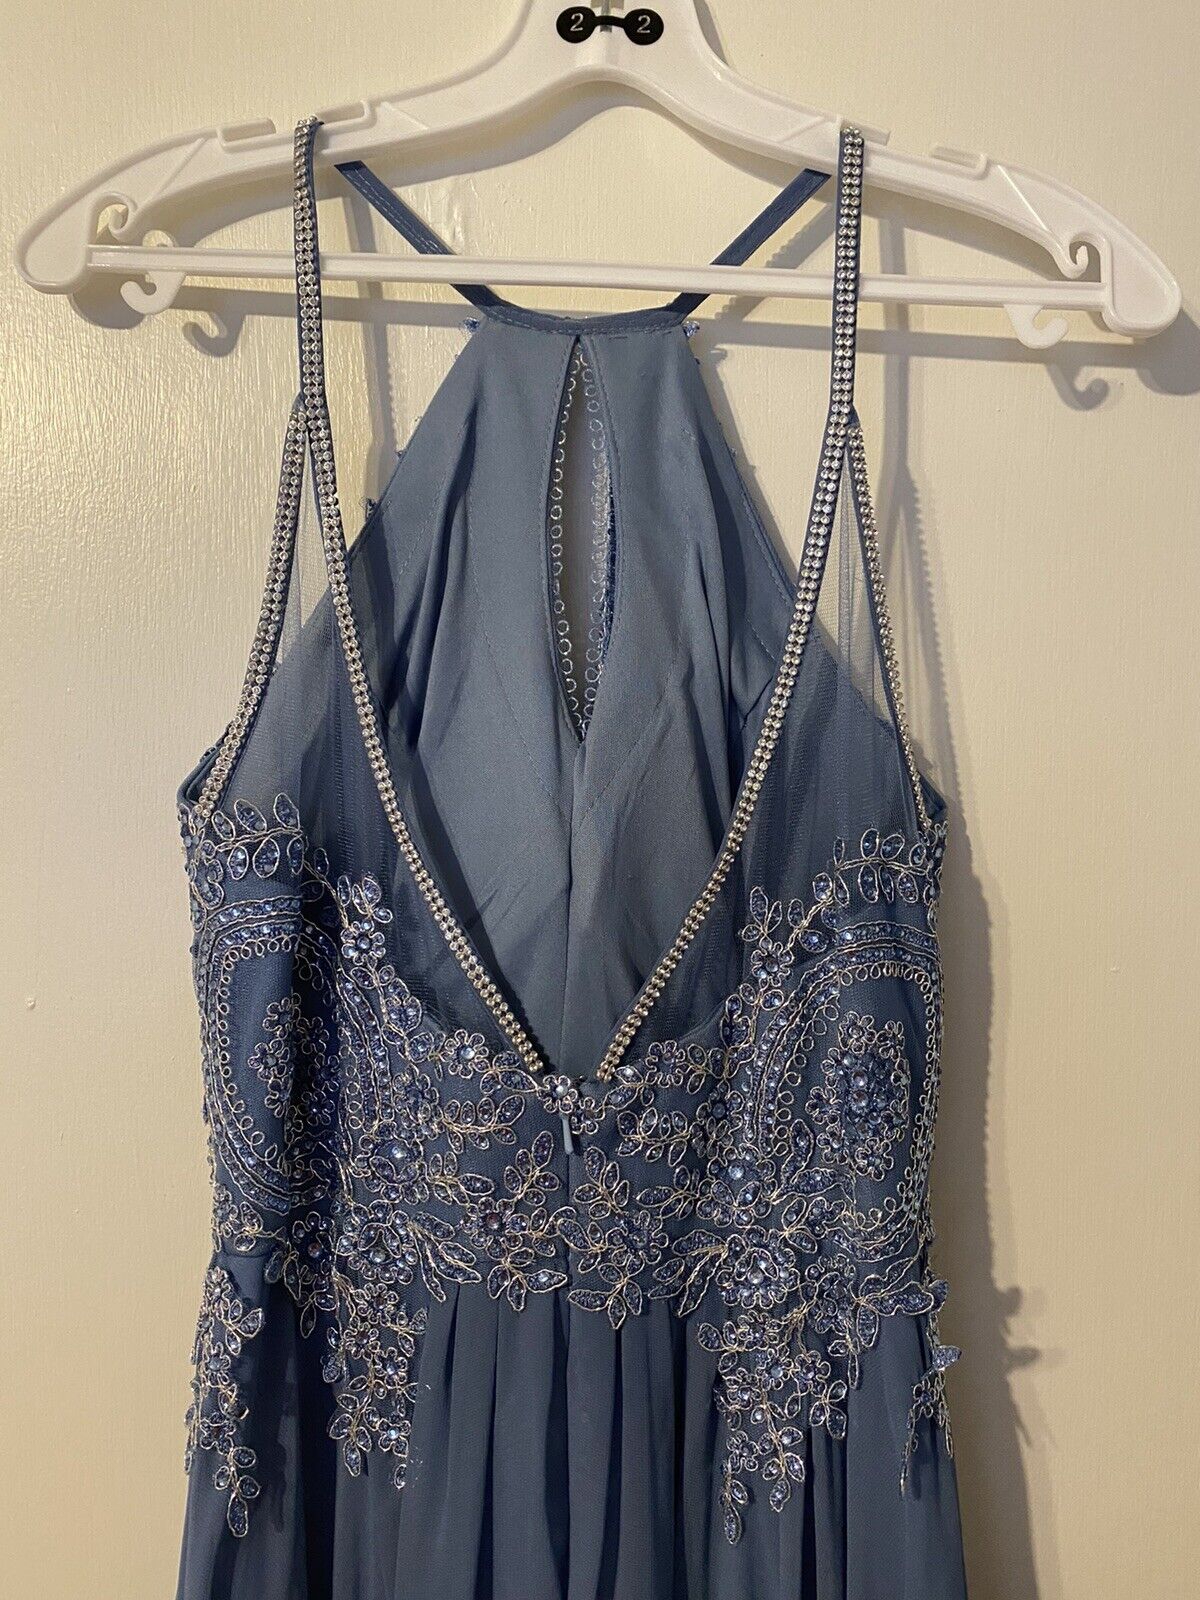 Fiesta Fashion Blue Formal Dress Size 2 - image 3